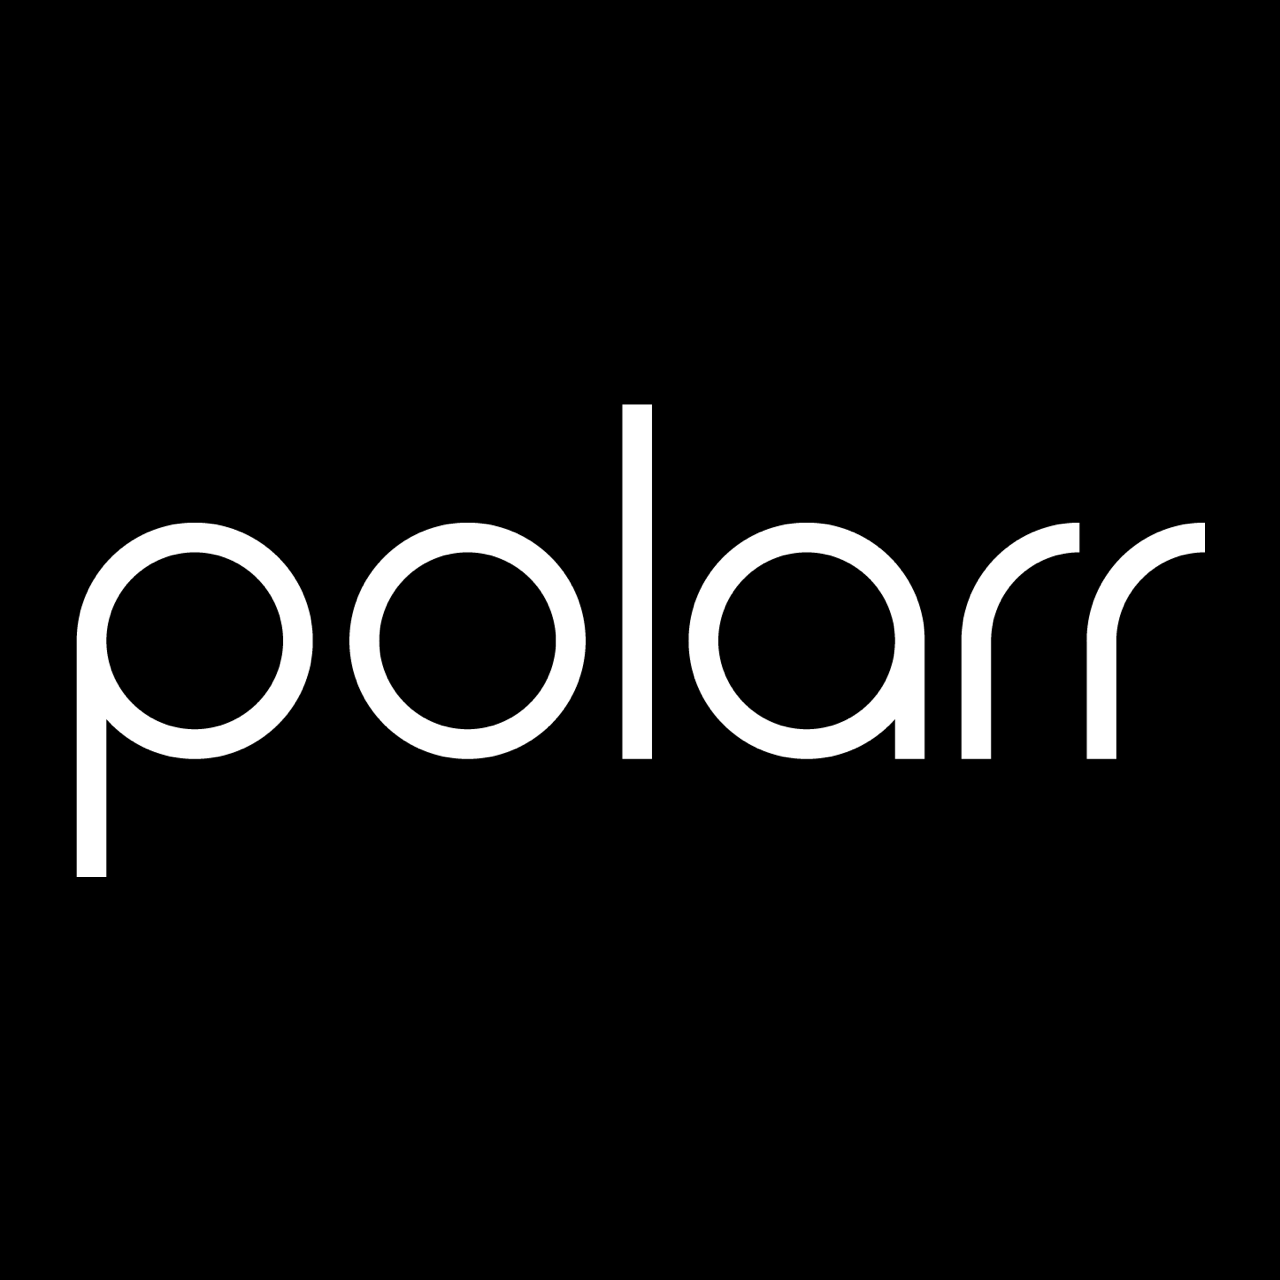 Polarr - FotoJet Alternatives for macOS